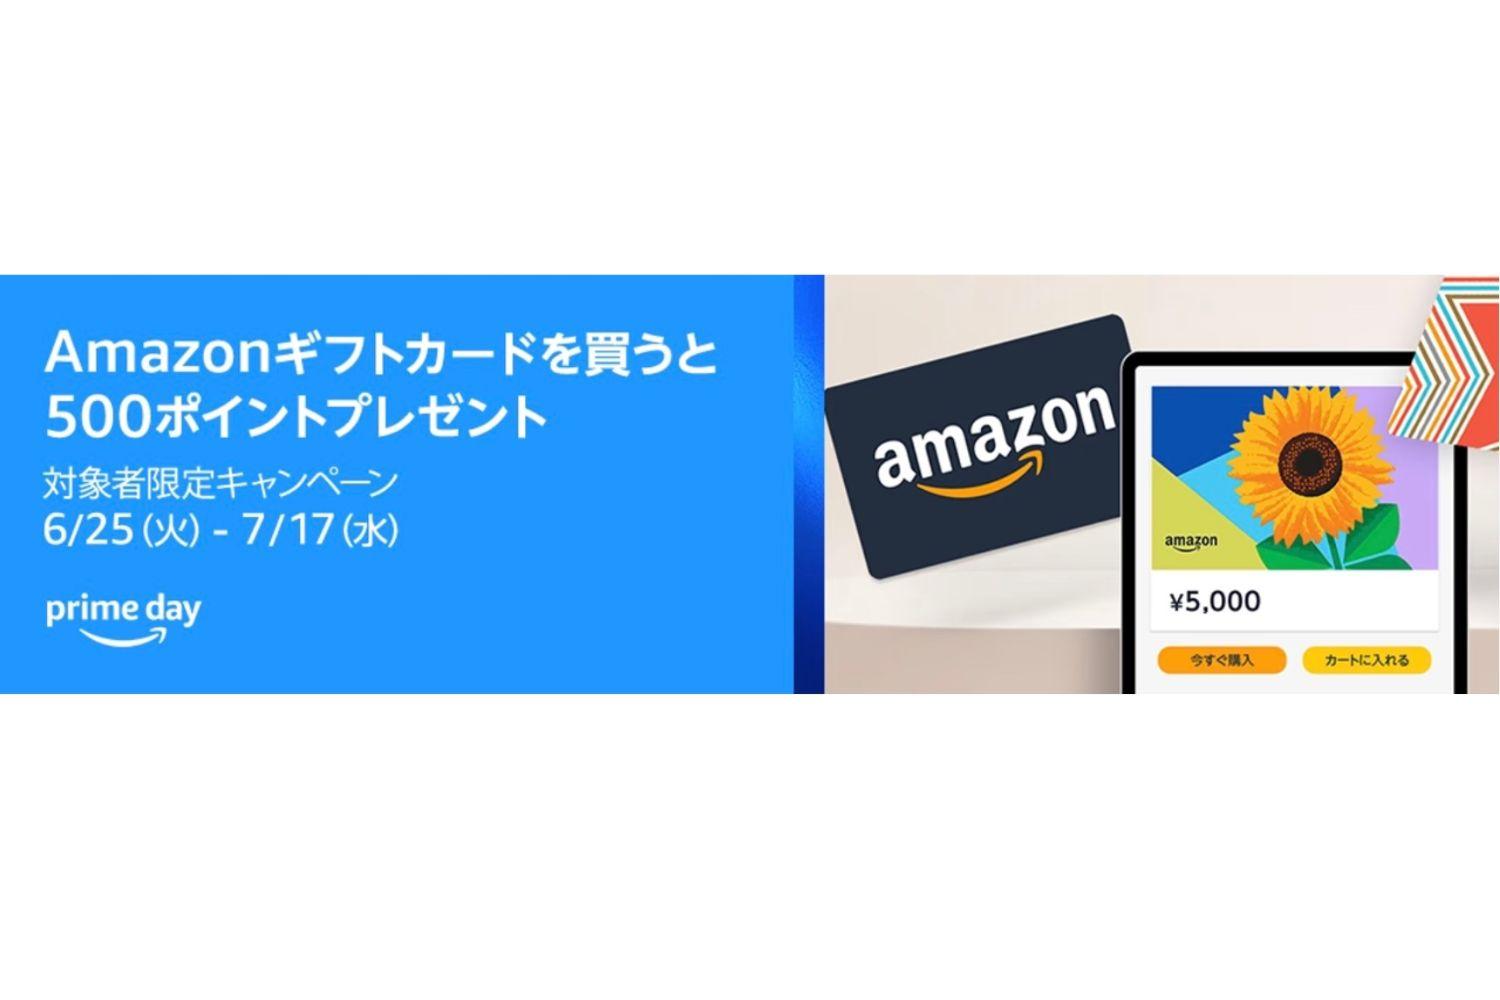 Amazonギフトカードを購入して500円分のポイントをゲットする方法。17日まで実施中